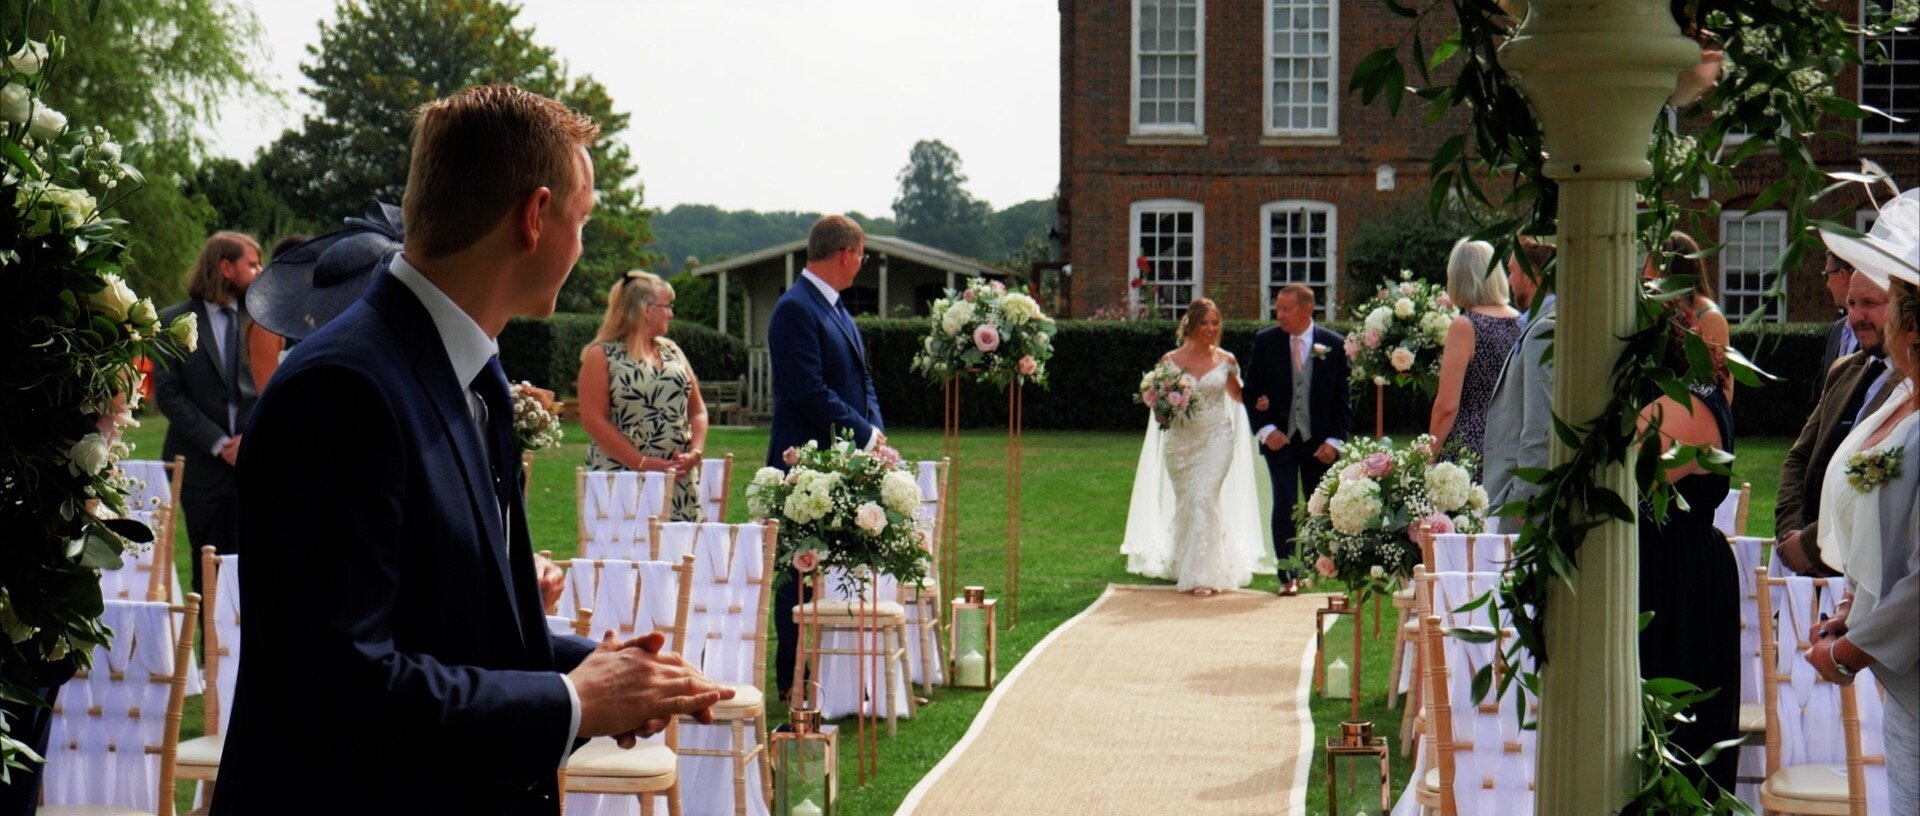 Here comes the bride wedding video Essex.jpg